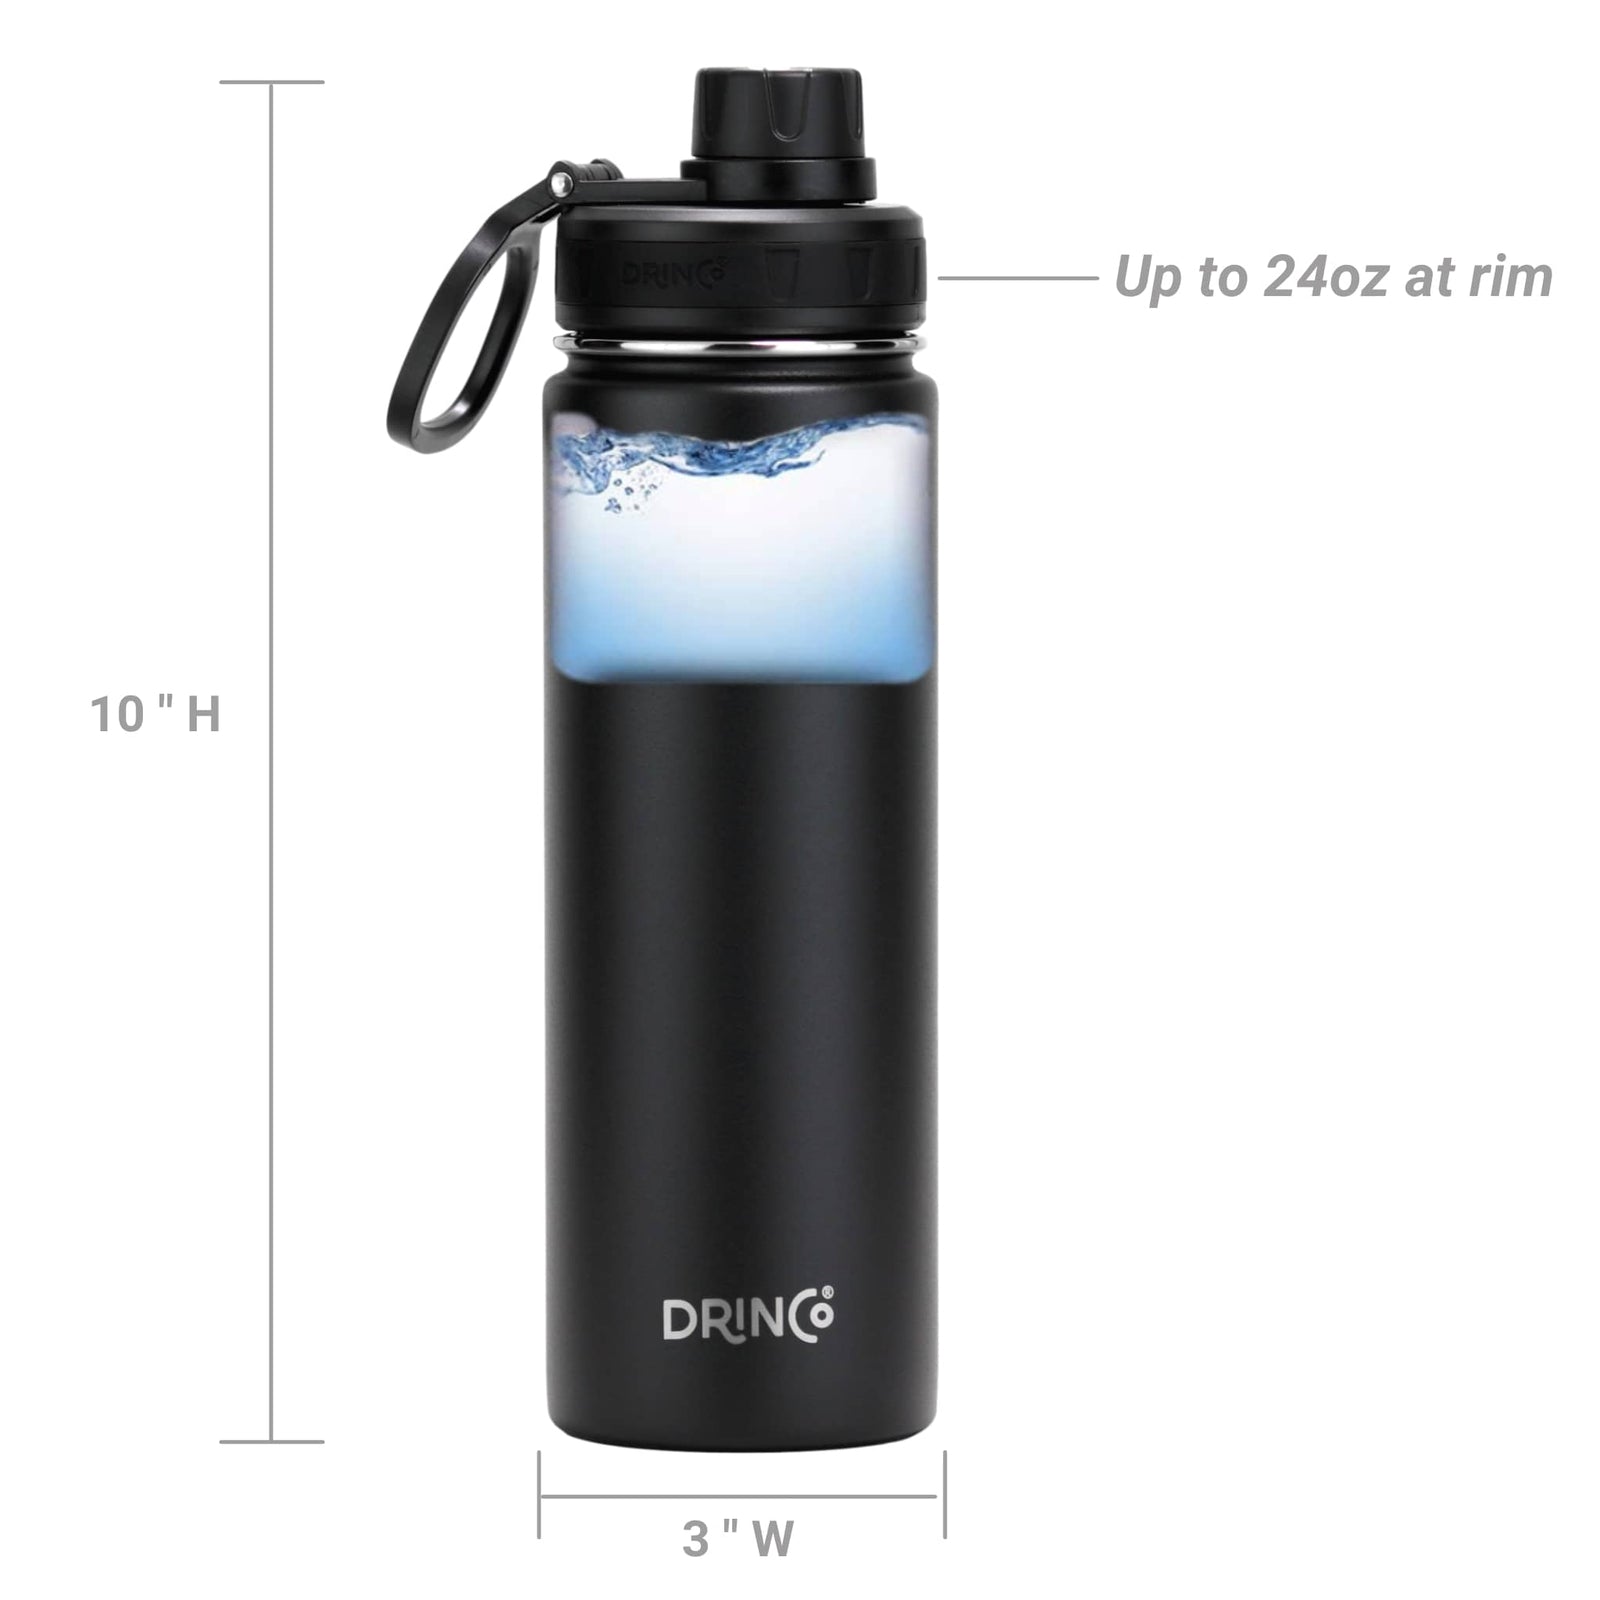 DRINCO® 22oz Stainless Steel Sport Water Bottle - Black